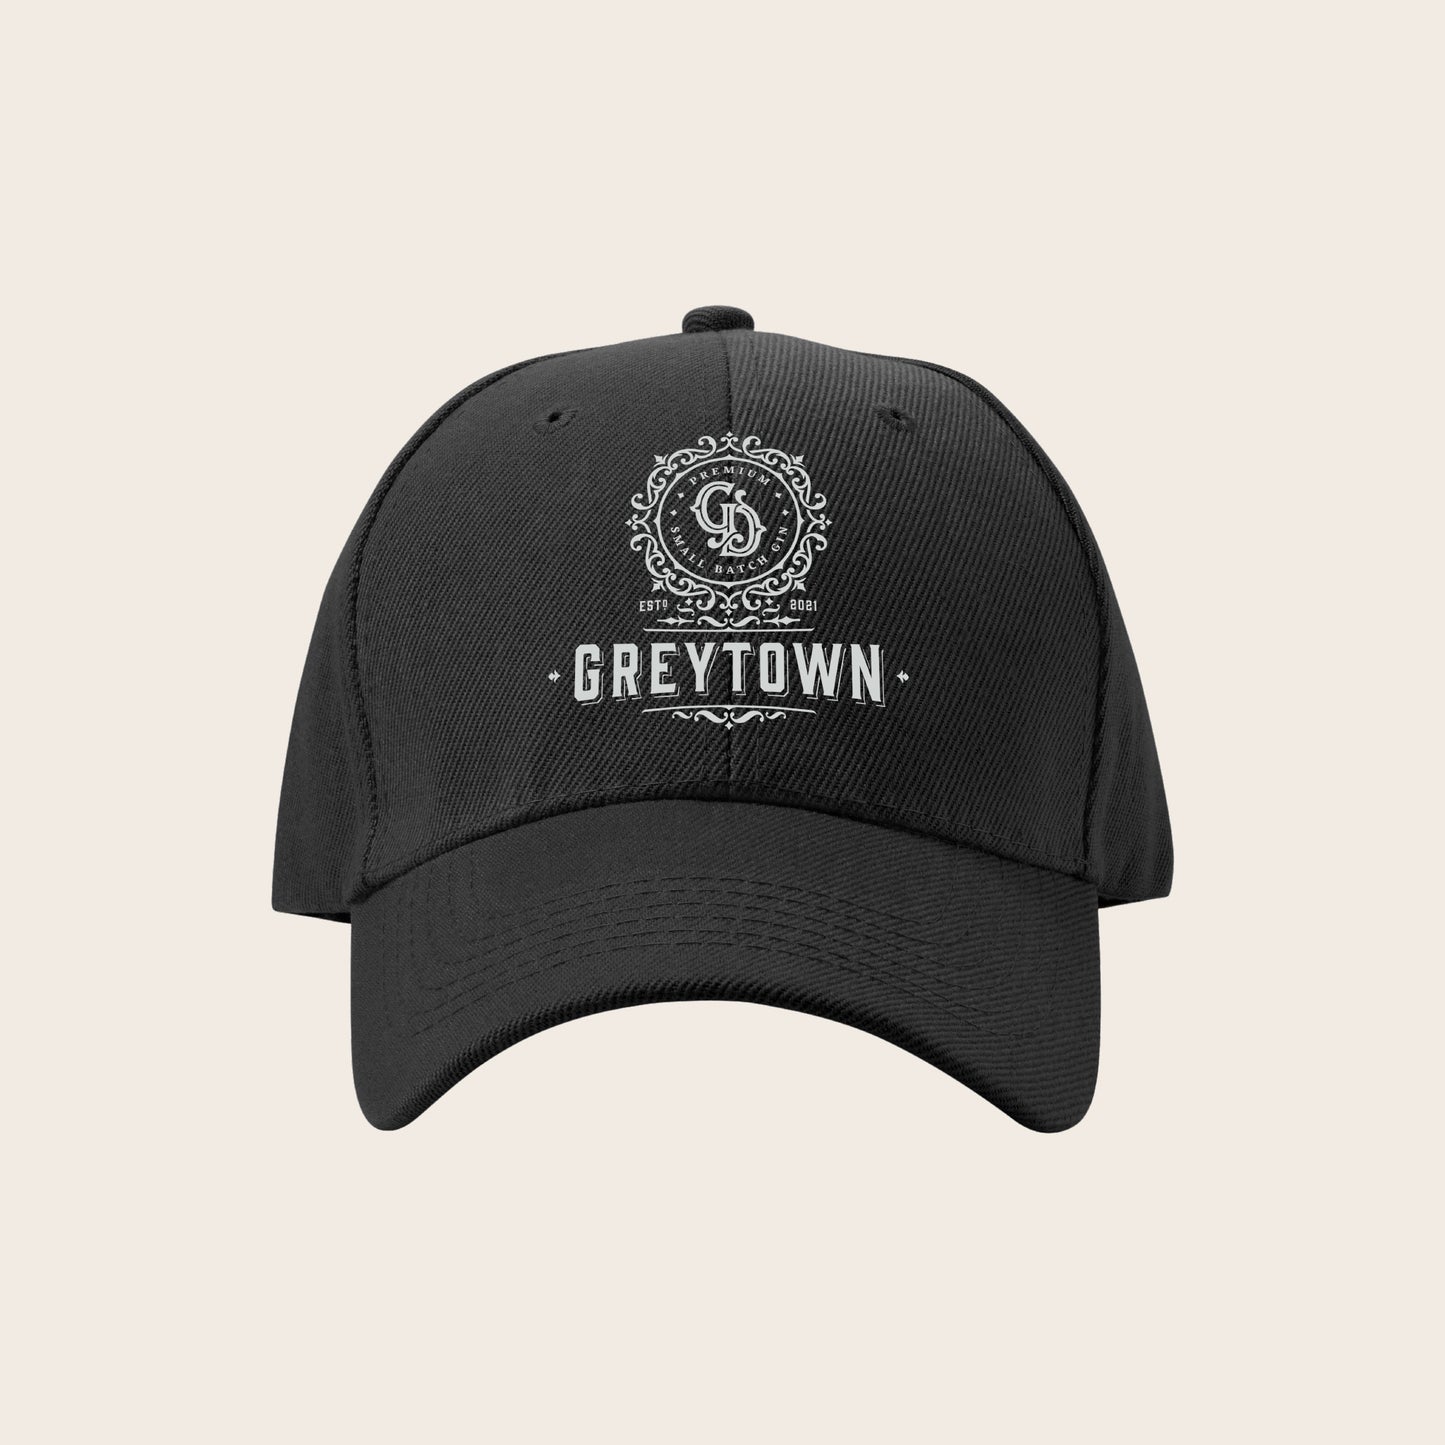 Greytown Distilling Company Cap